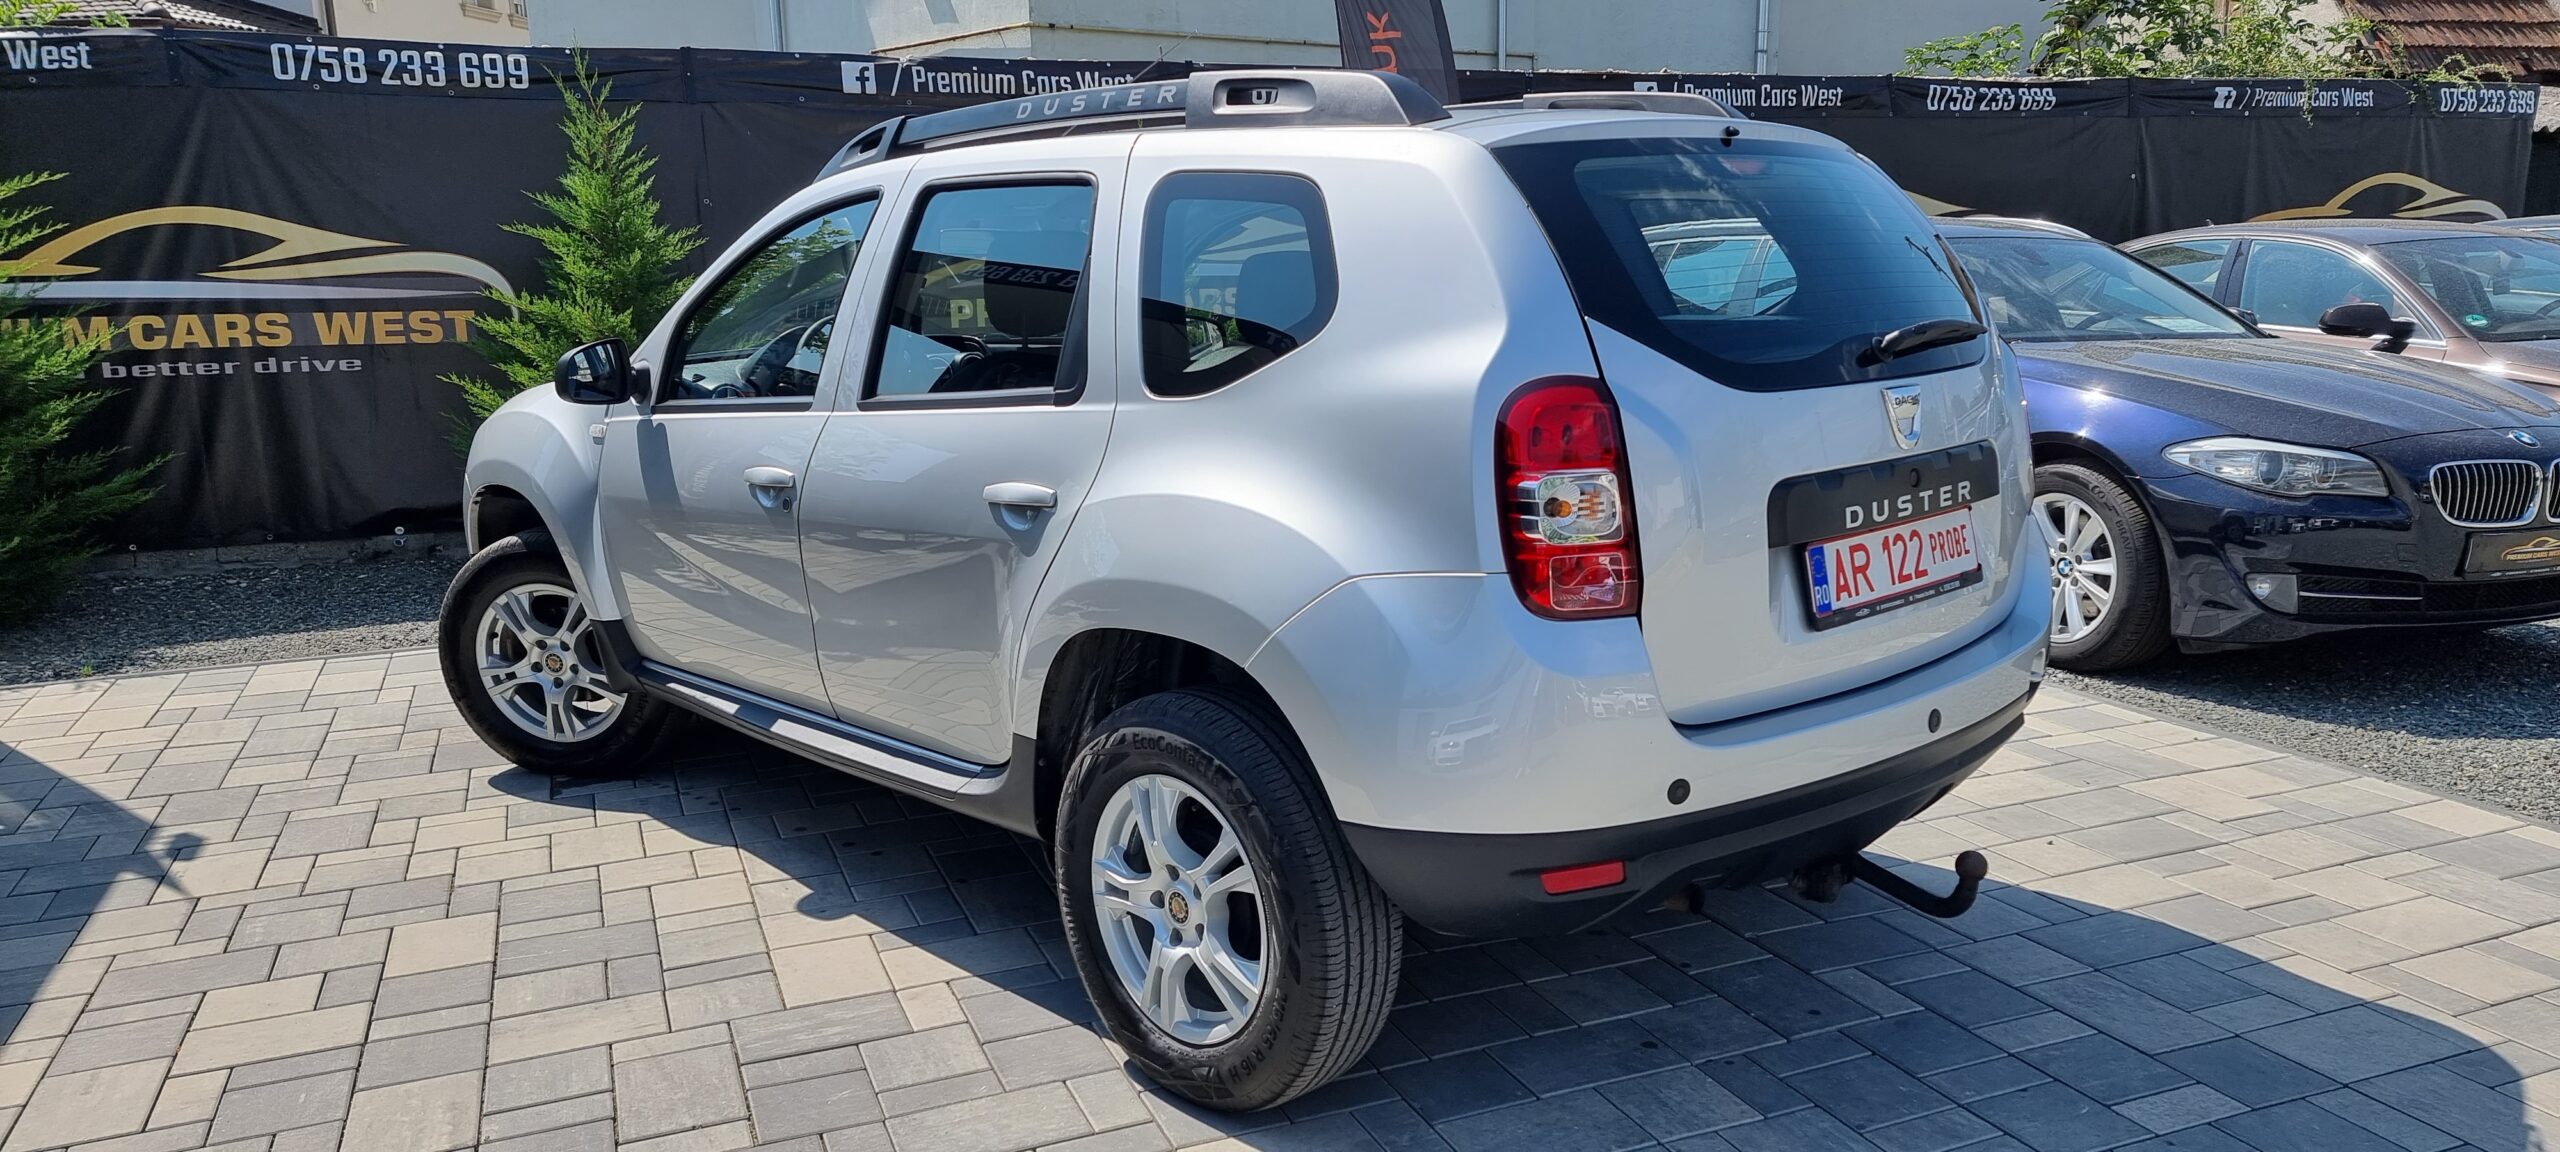 Dacia Duster 2014 Euro5 1.6 benzina